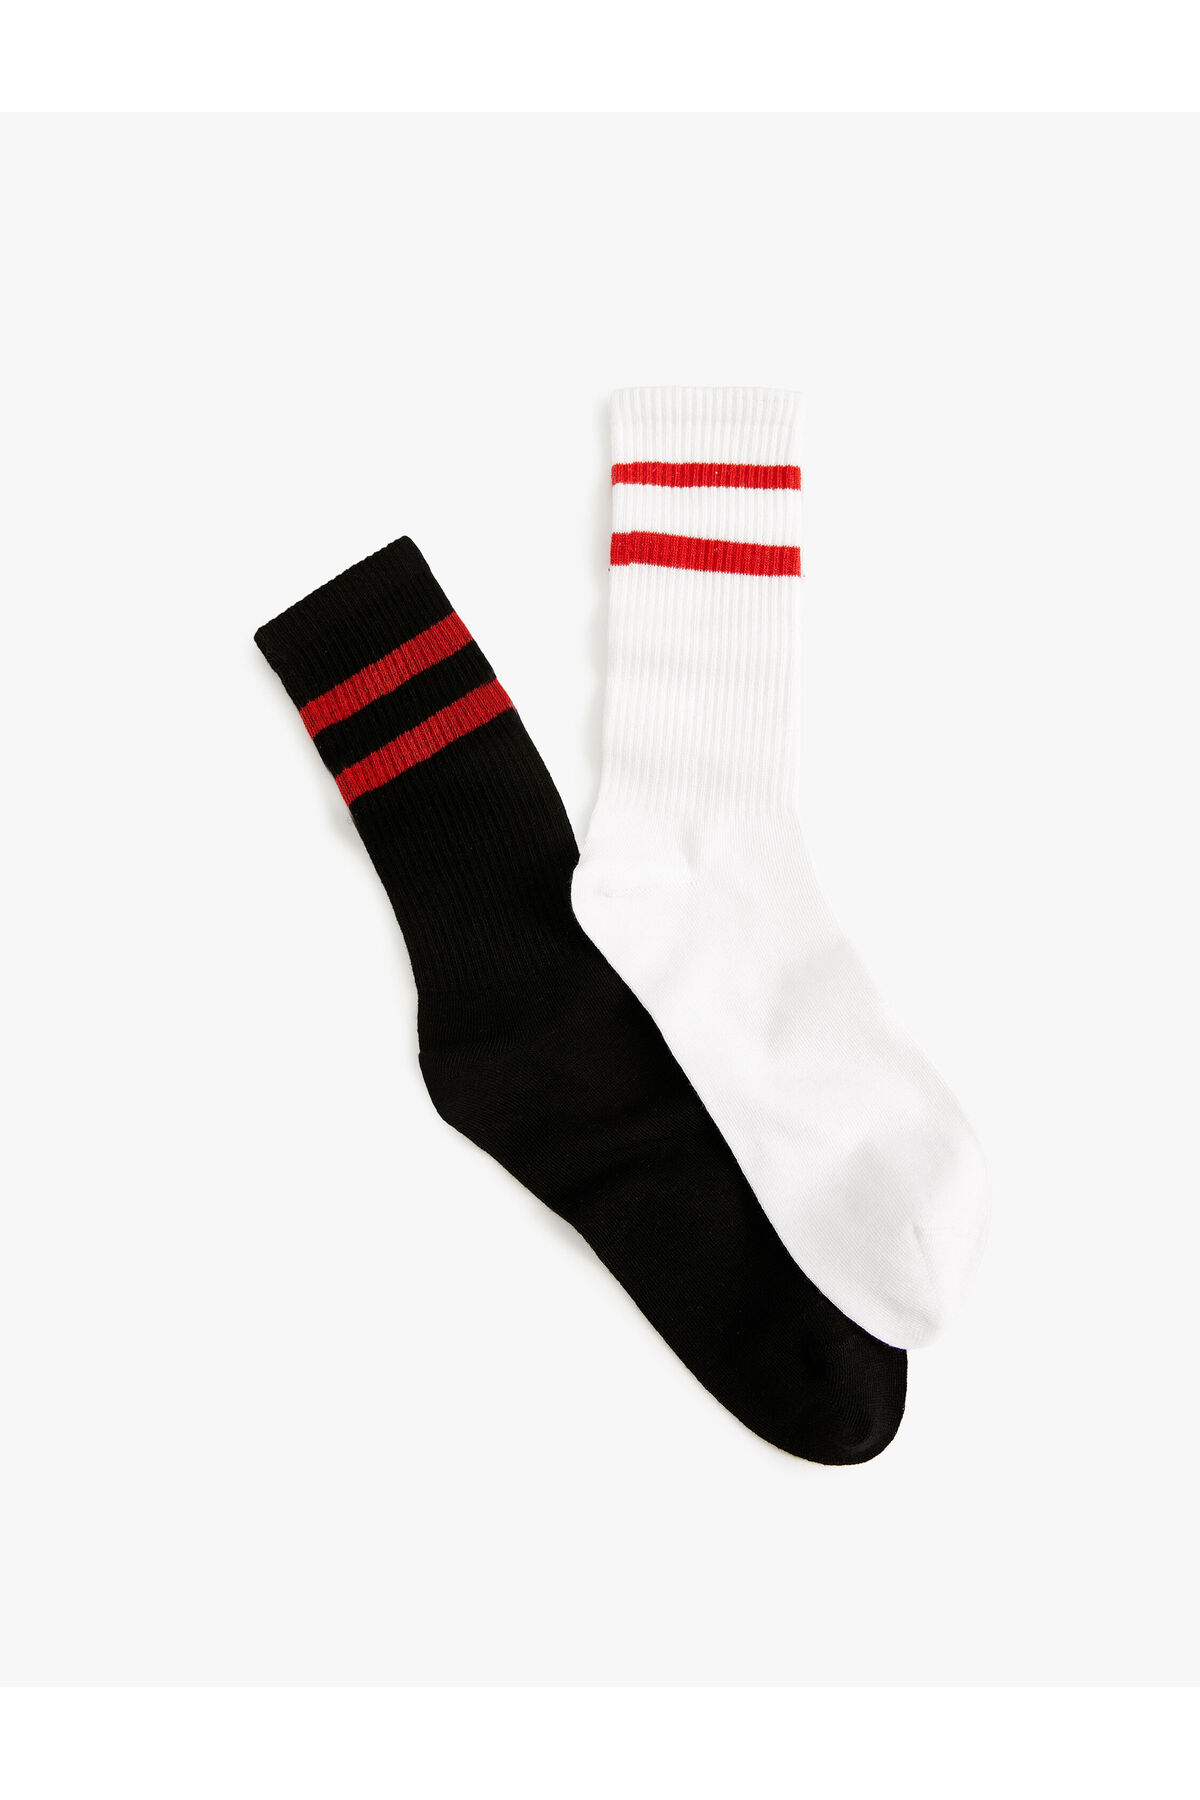 Koton 2-Pack Tennis Socks Striped Patterned Multi Color